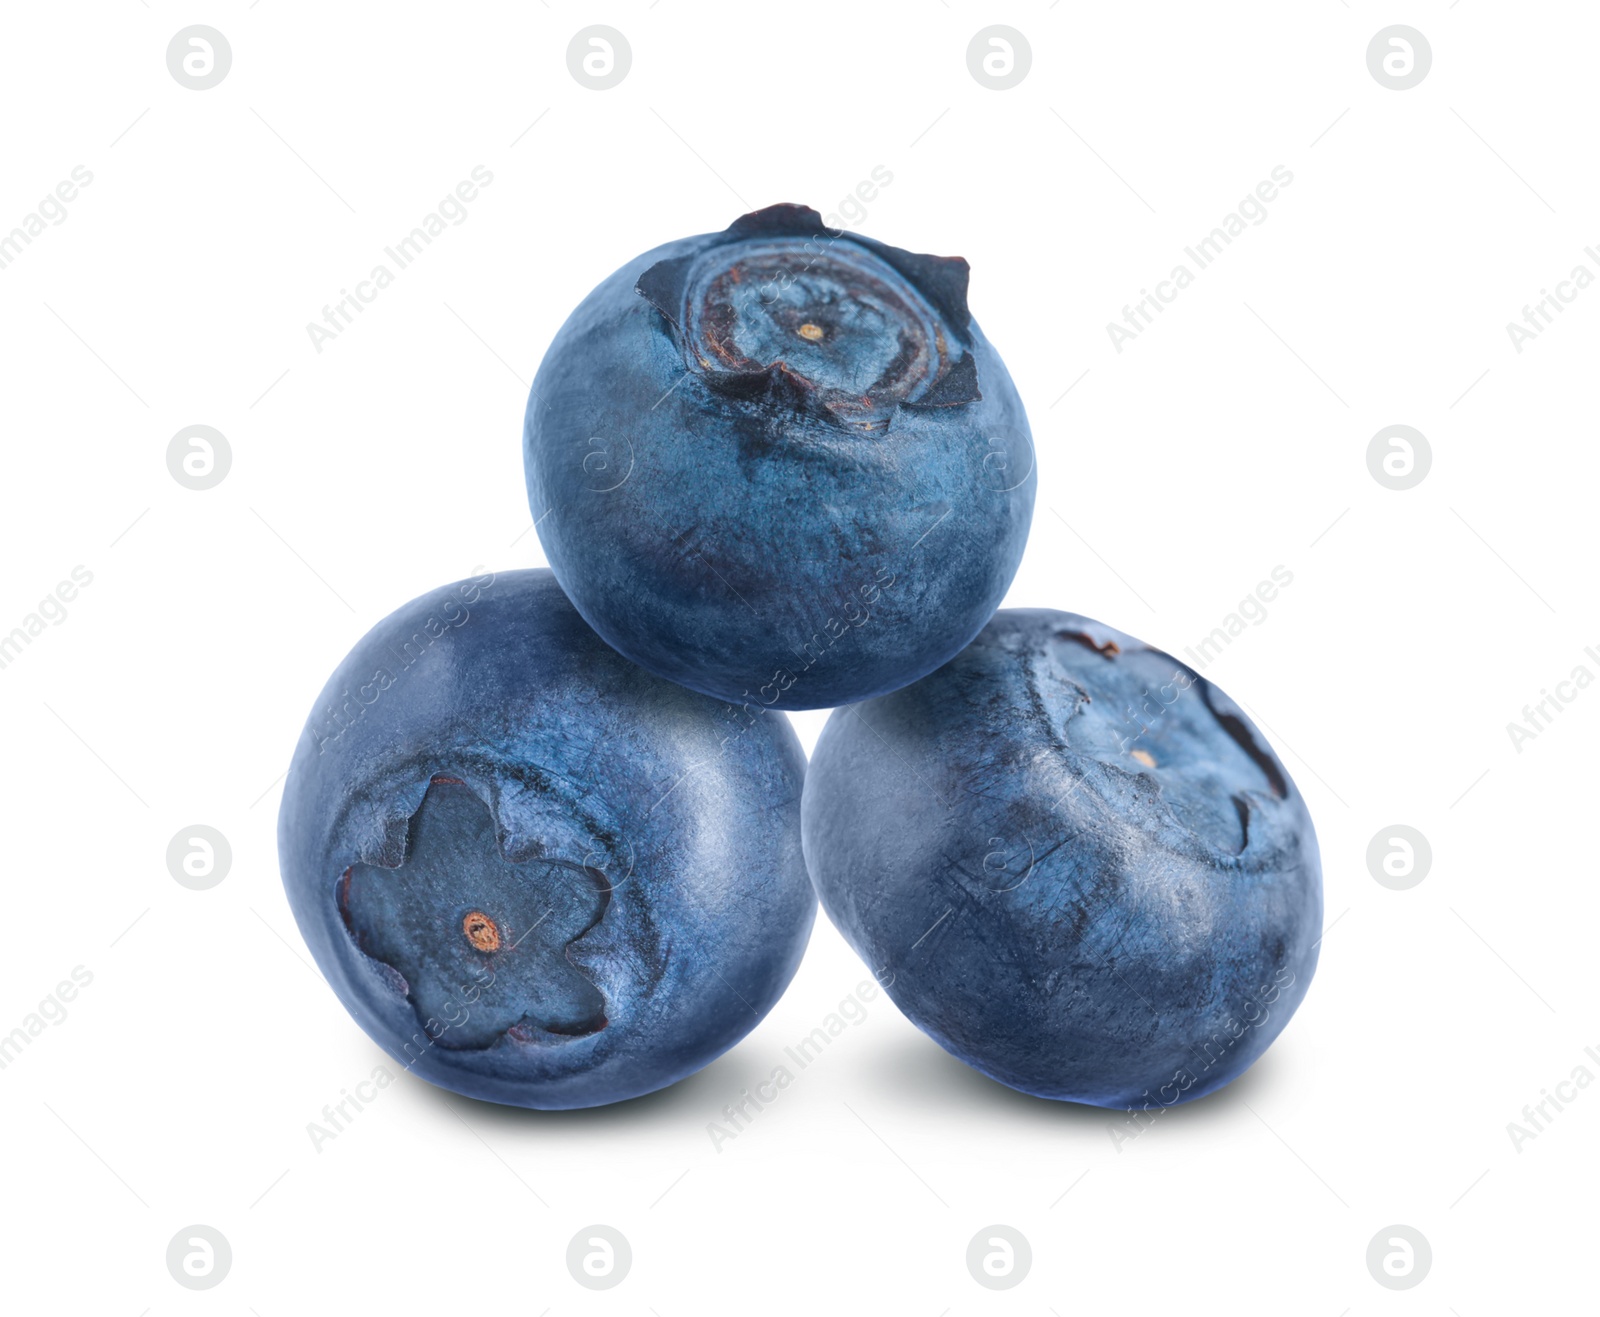 Image of Three whole ripe blueberries on white background